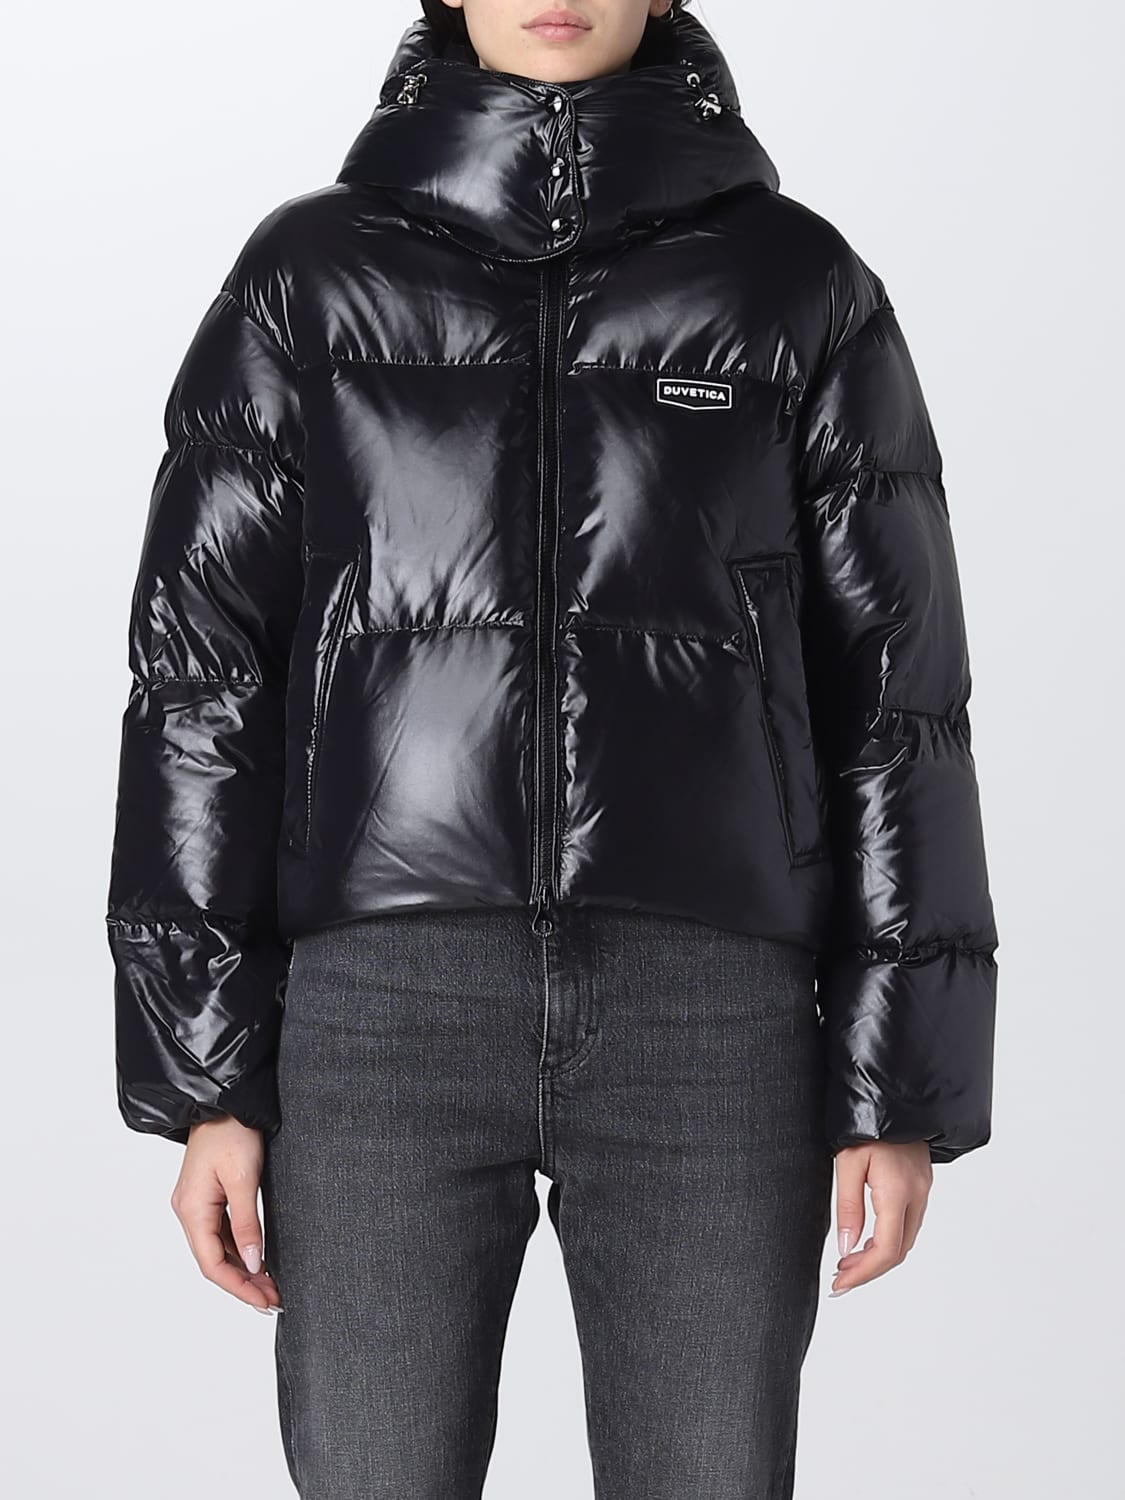 Duvetica Outlet: jacket for woman - Black | Duvetica jacket ...